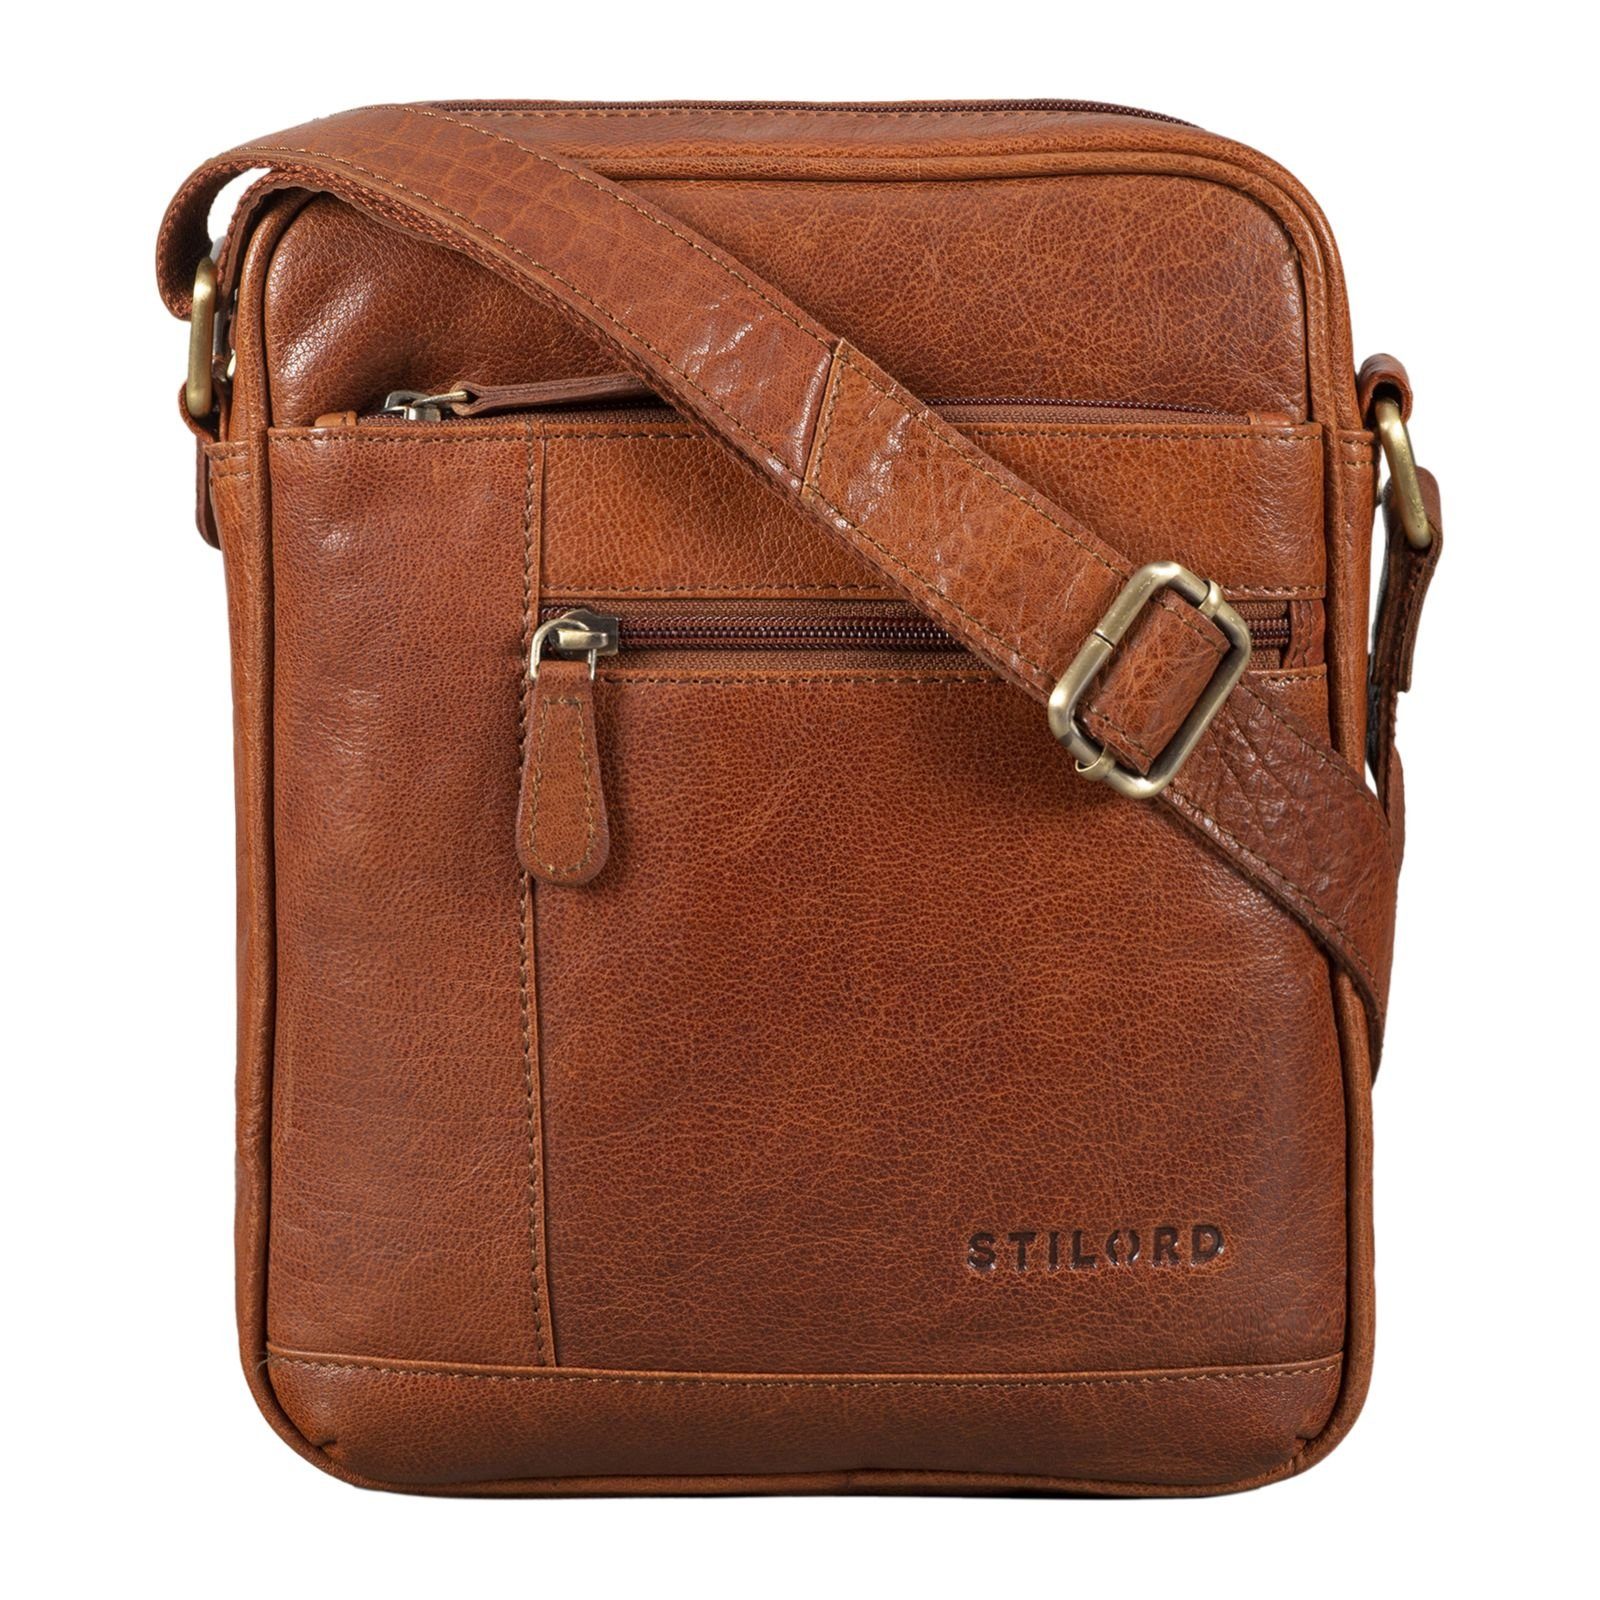 STILORD Messenger Bag "Diego" klein Leder Herrentasche Vintage maraska - braun